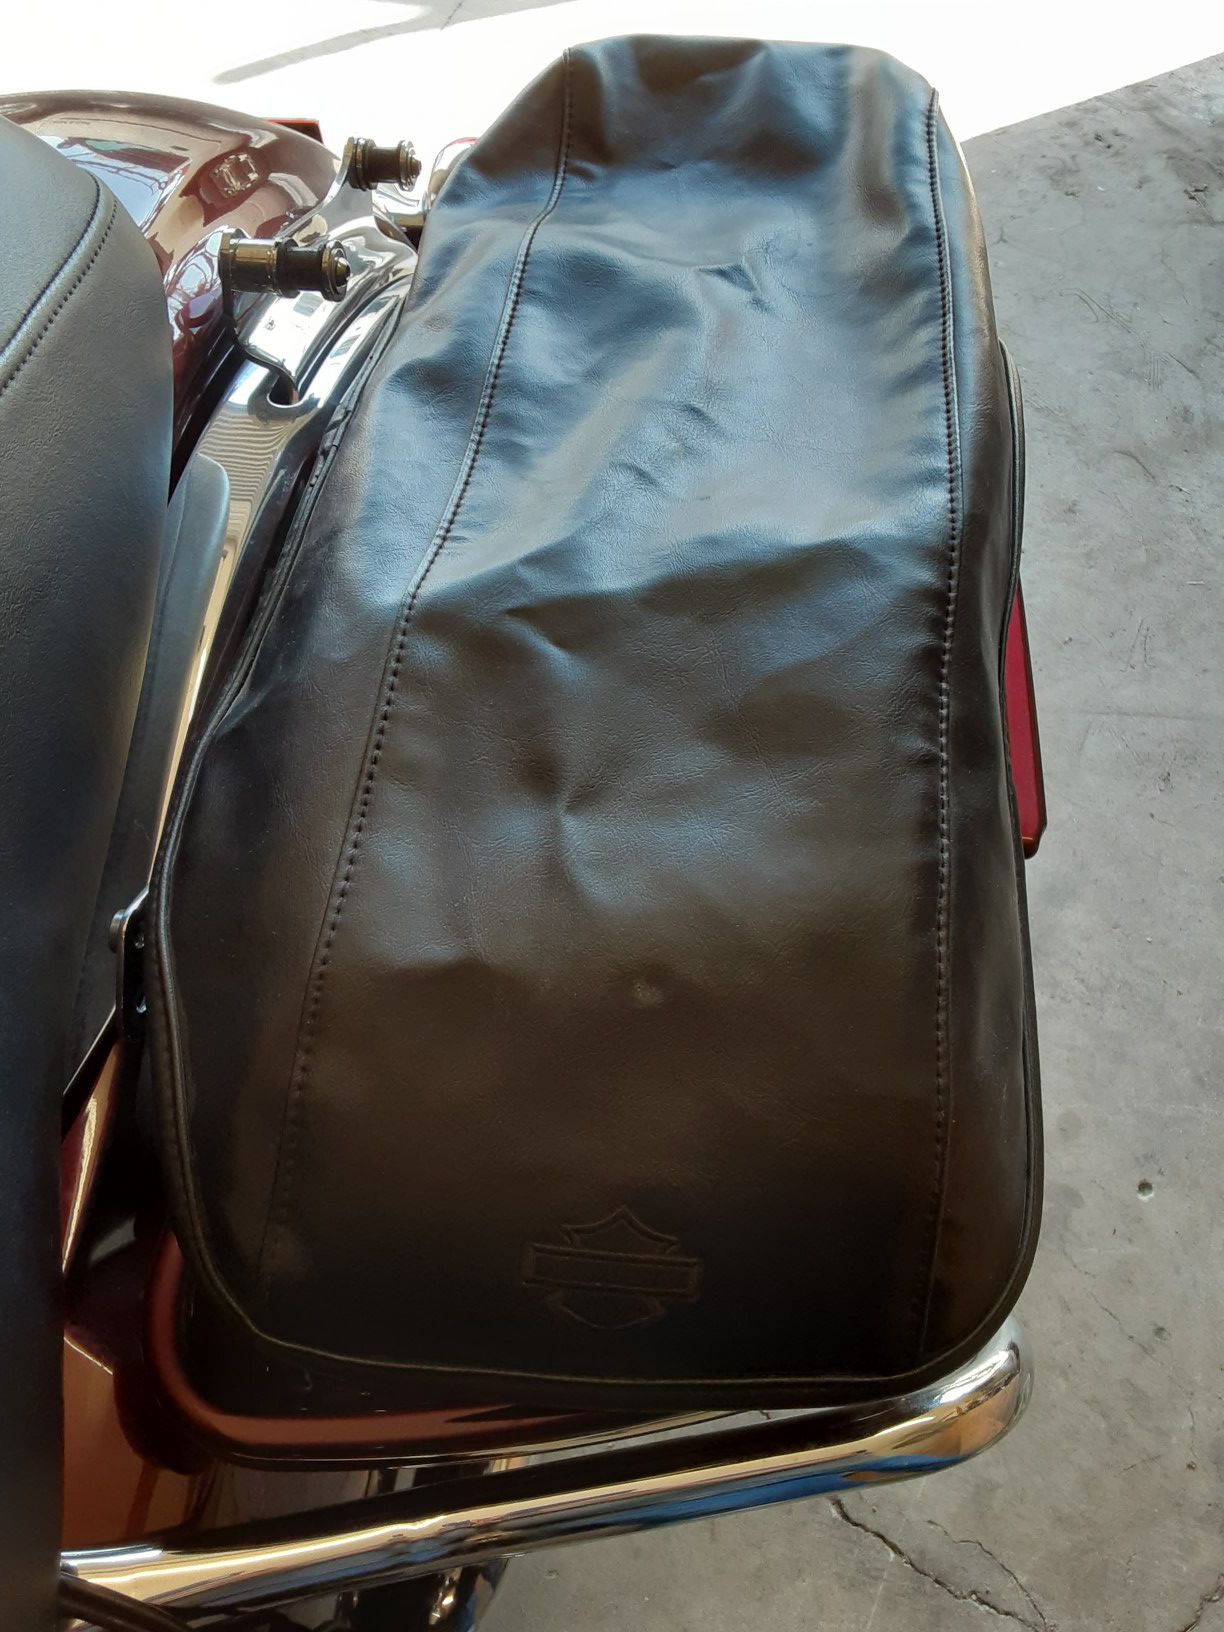 Harley Davidson saddle bag cover